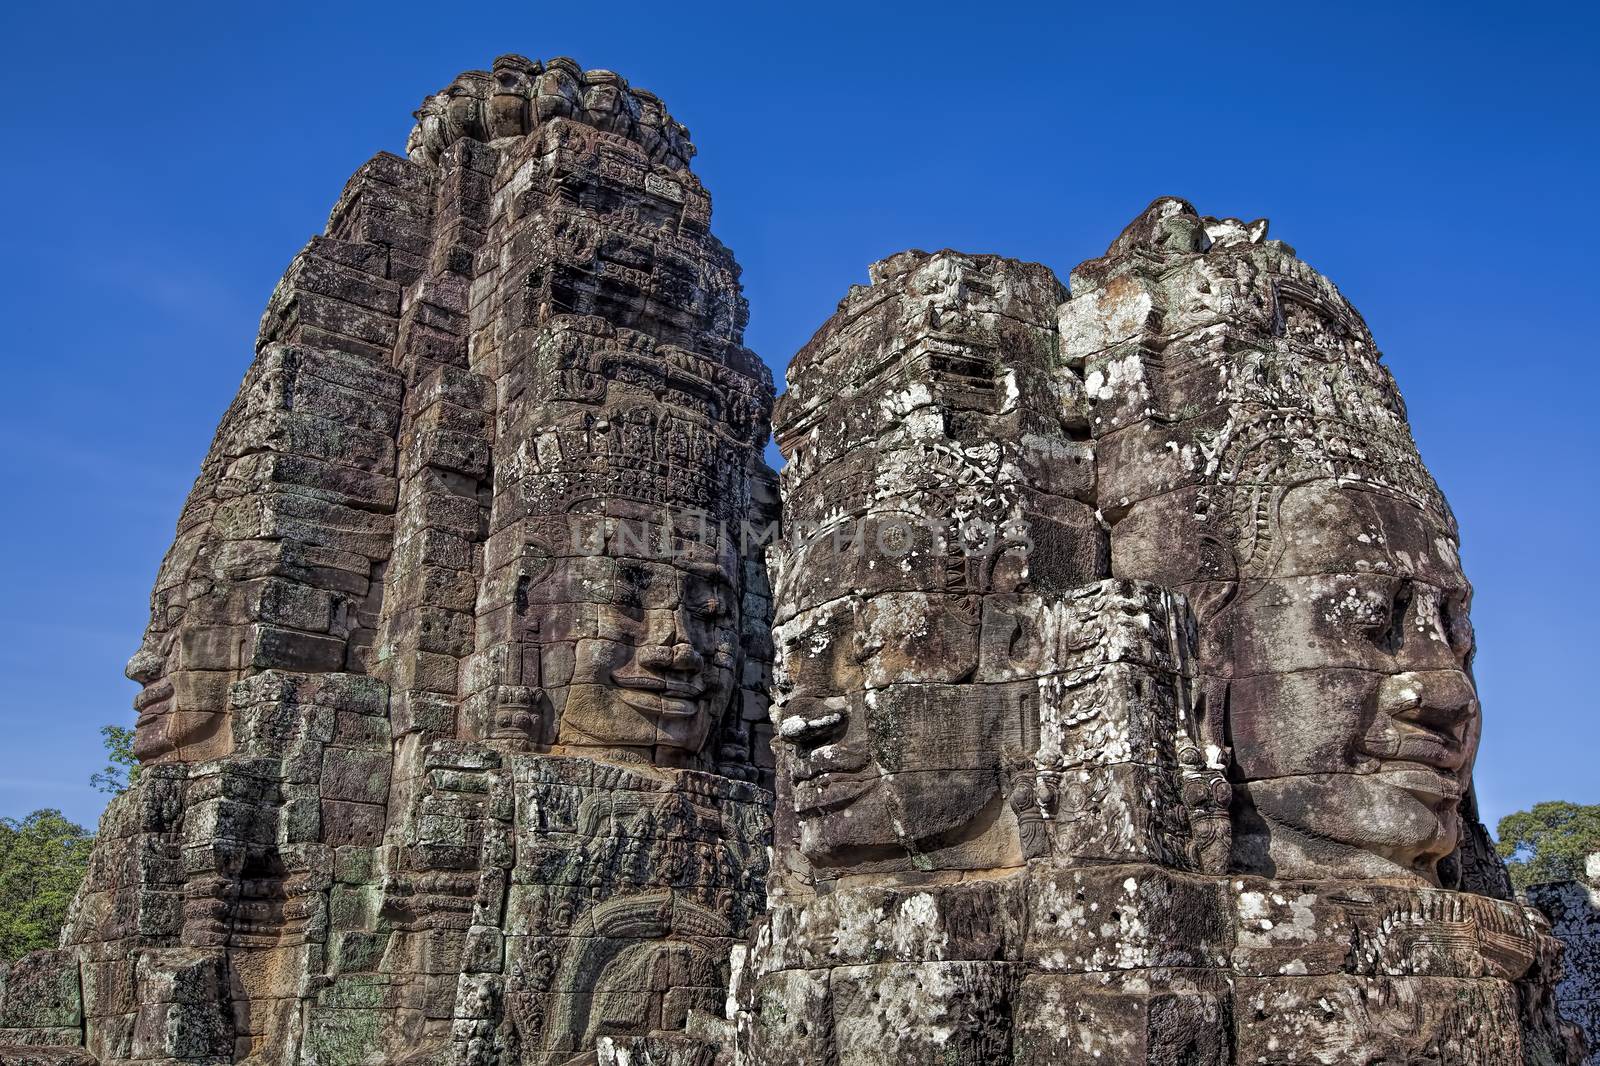 Bayon buddhist khmer temple in Angkor Wat, Cambodia